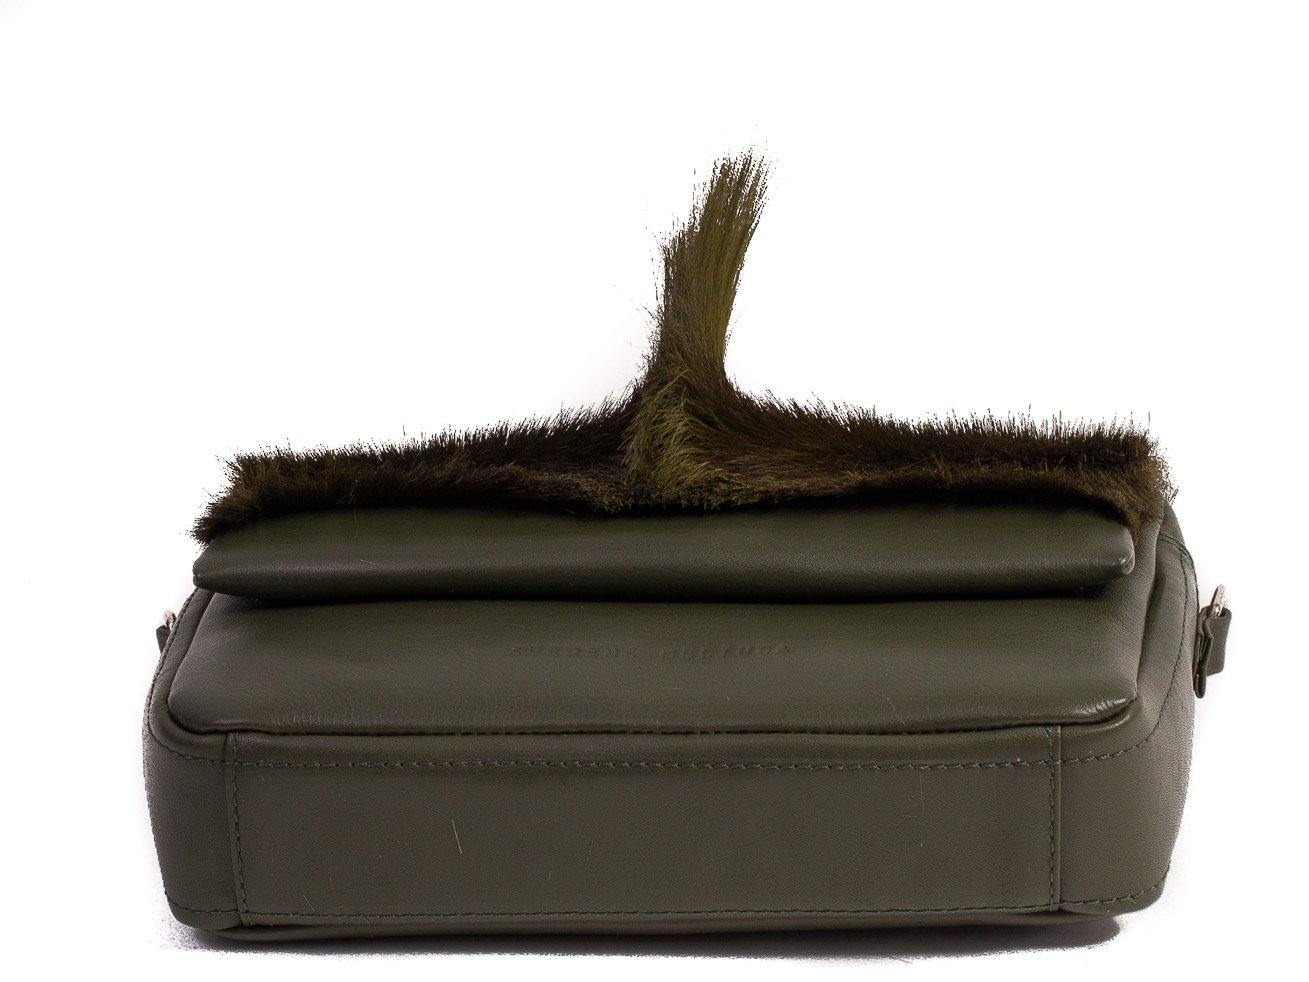 sherene melinda springbok hair-on-hide green leather shoulder bag Fan bottom